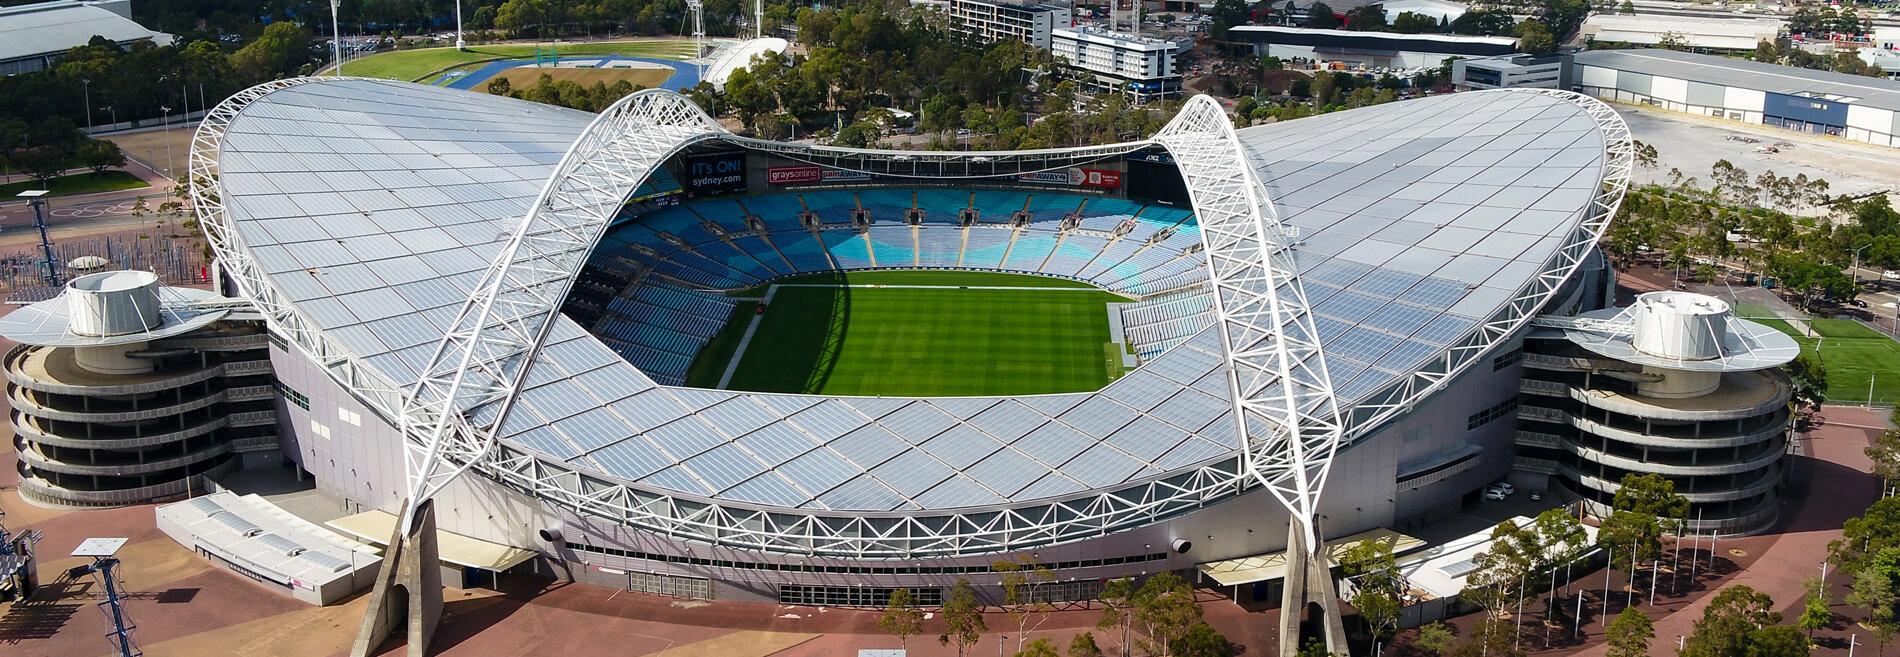 Anz Stadium Sydney Australia Palram